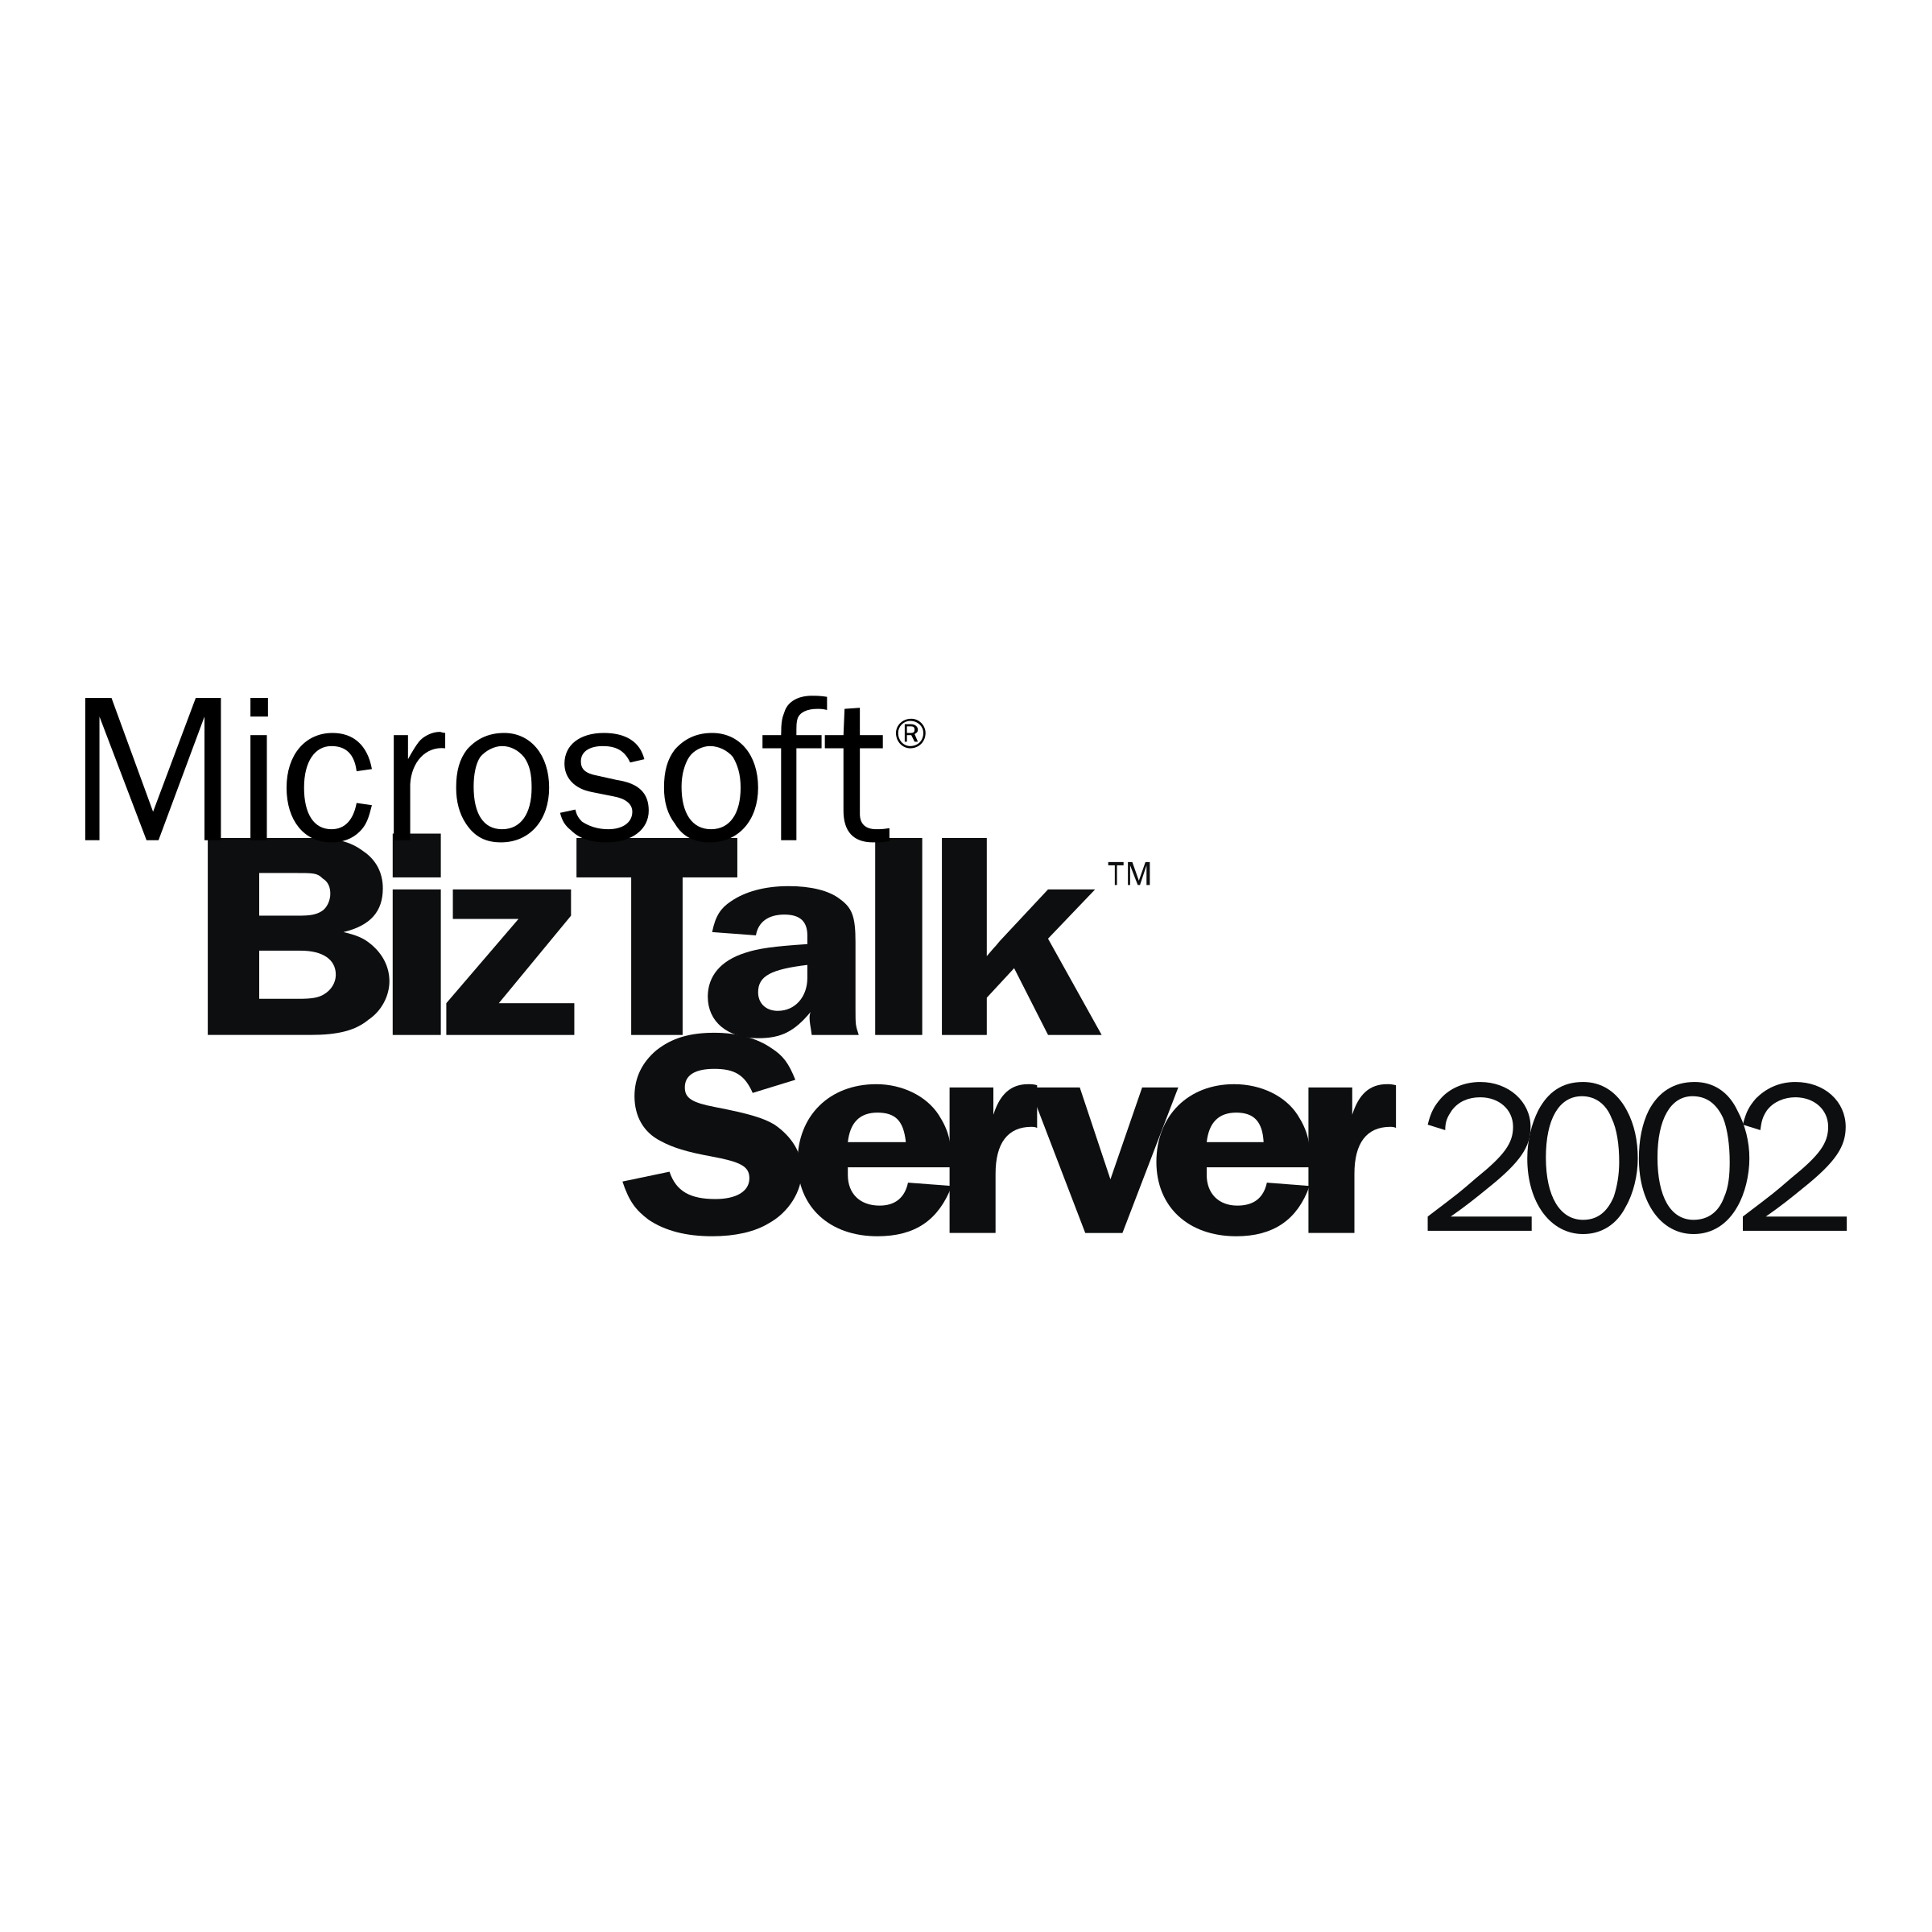 BizTalk Logo - Microsoft BizTalk Server 2002 Logo PNG Transparent & SVG Vector